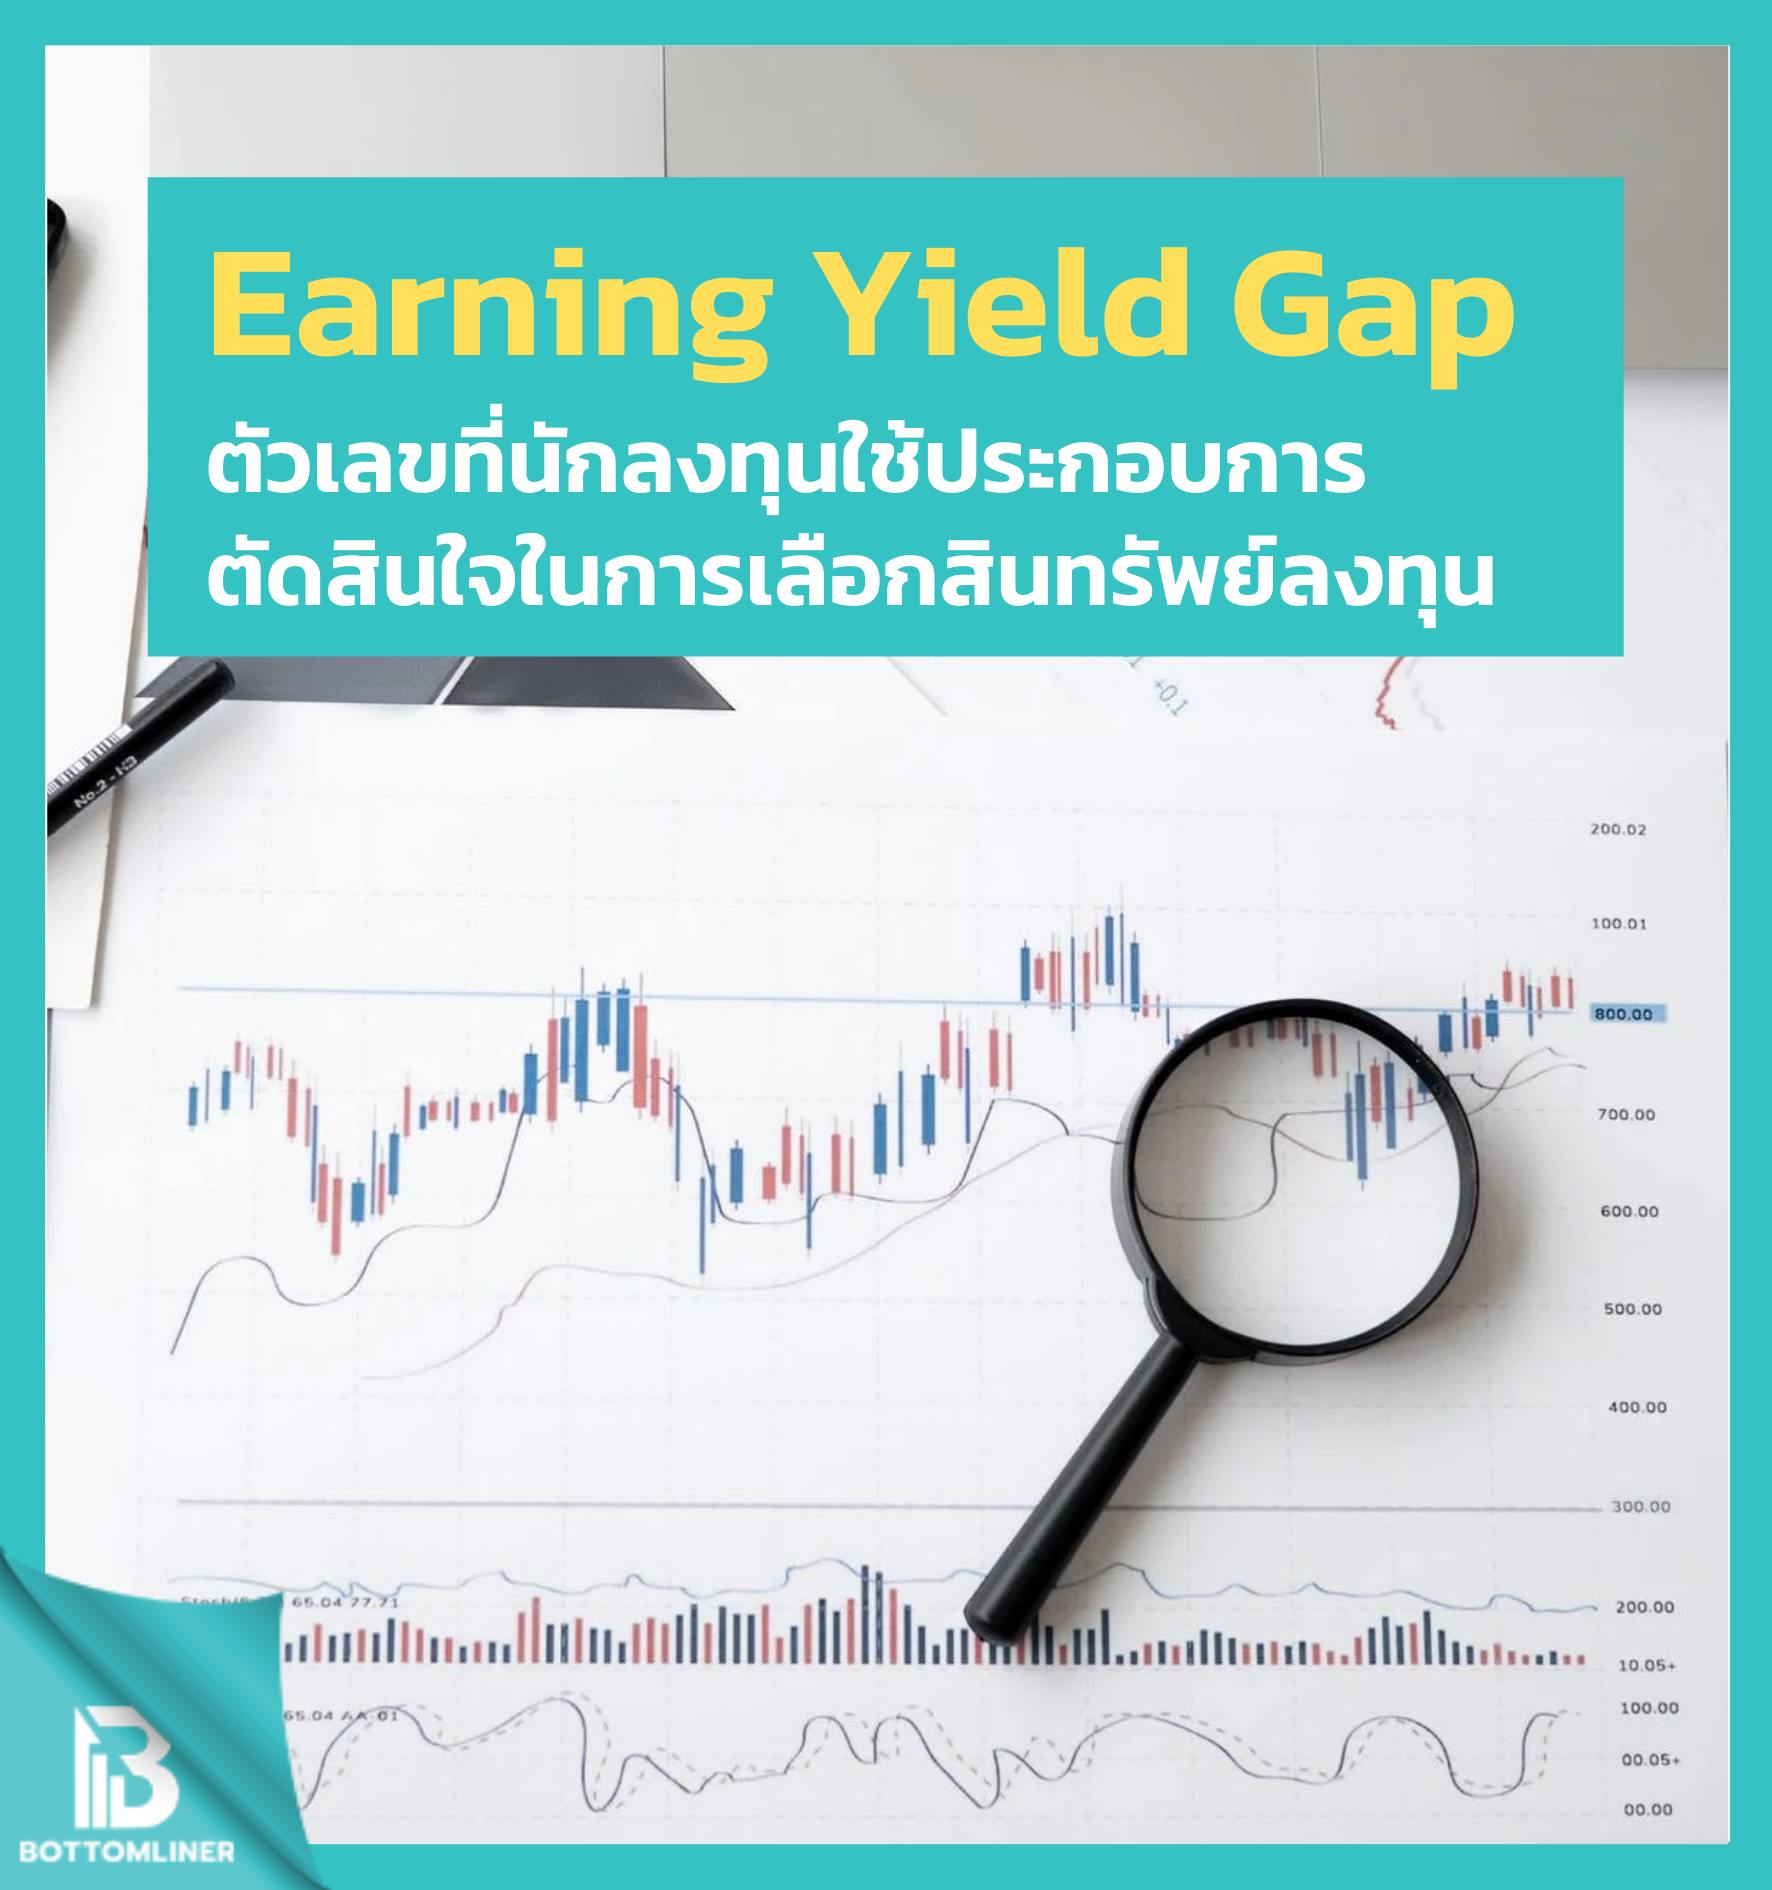 Earning Yield Gap อีกตัวเลขที่นักลงทุนใช้ประกอบการตัดสินใจในการเลือกสินทรัพย์ลงทุน